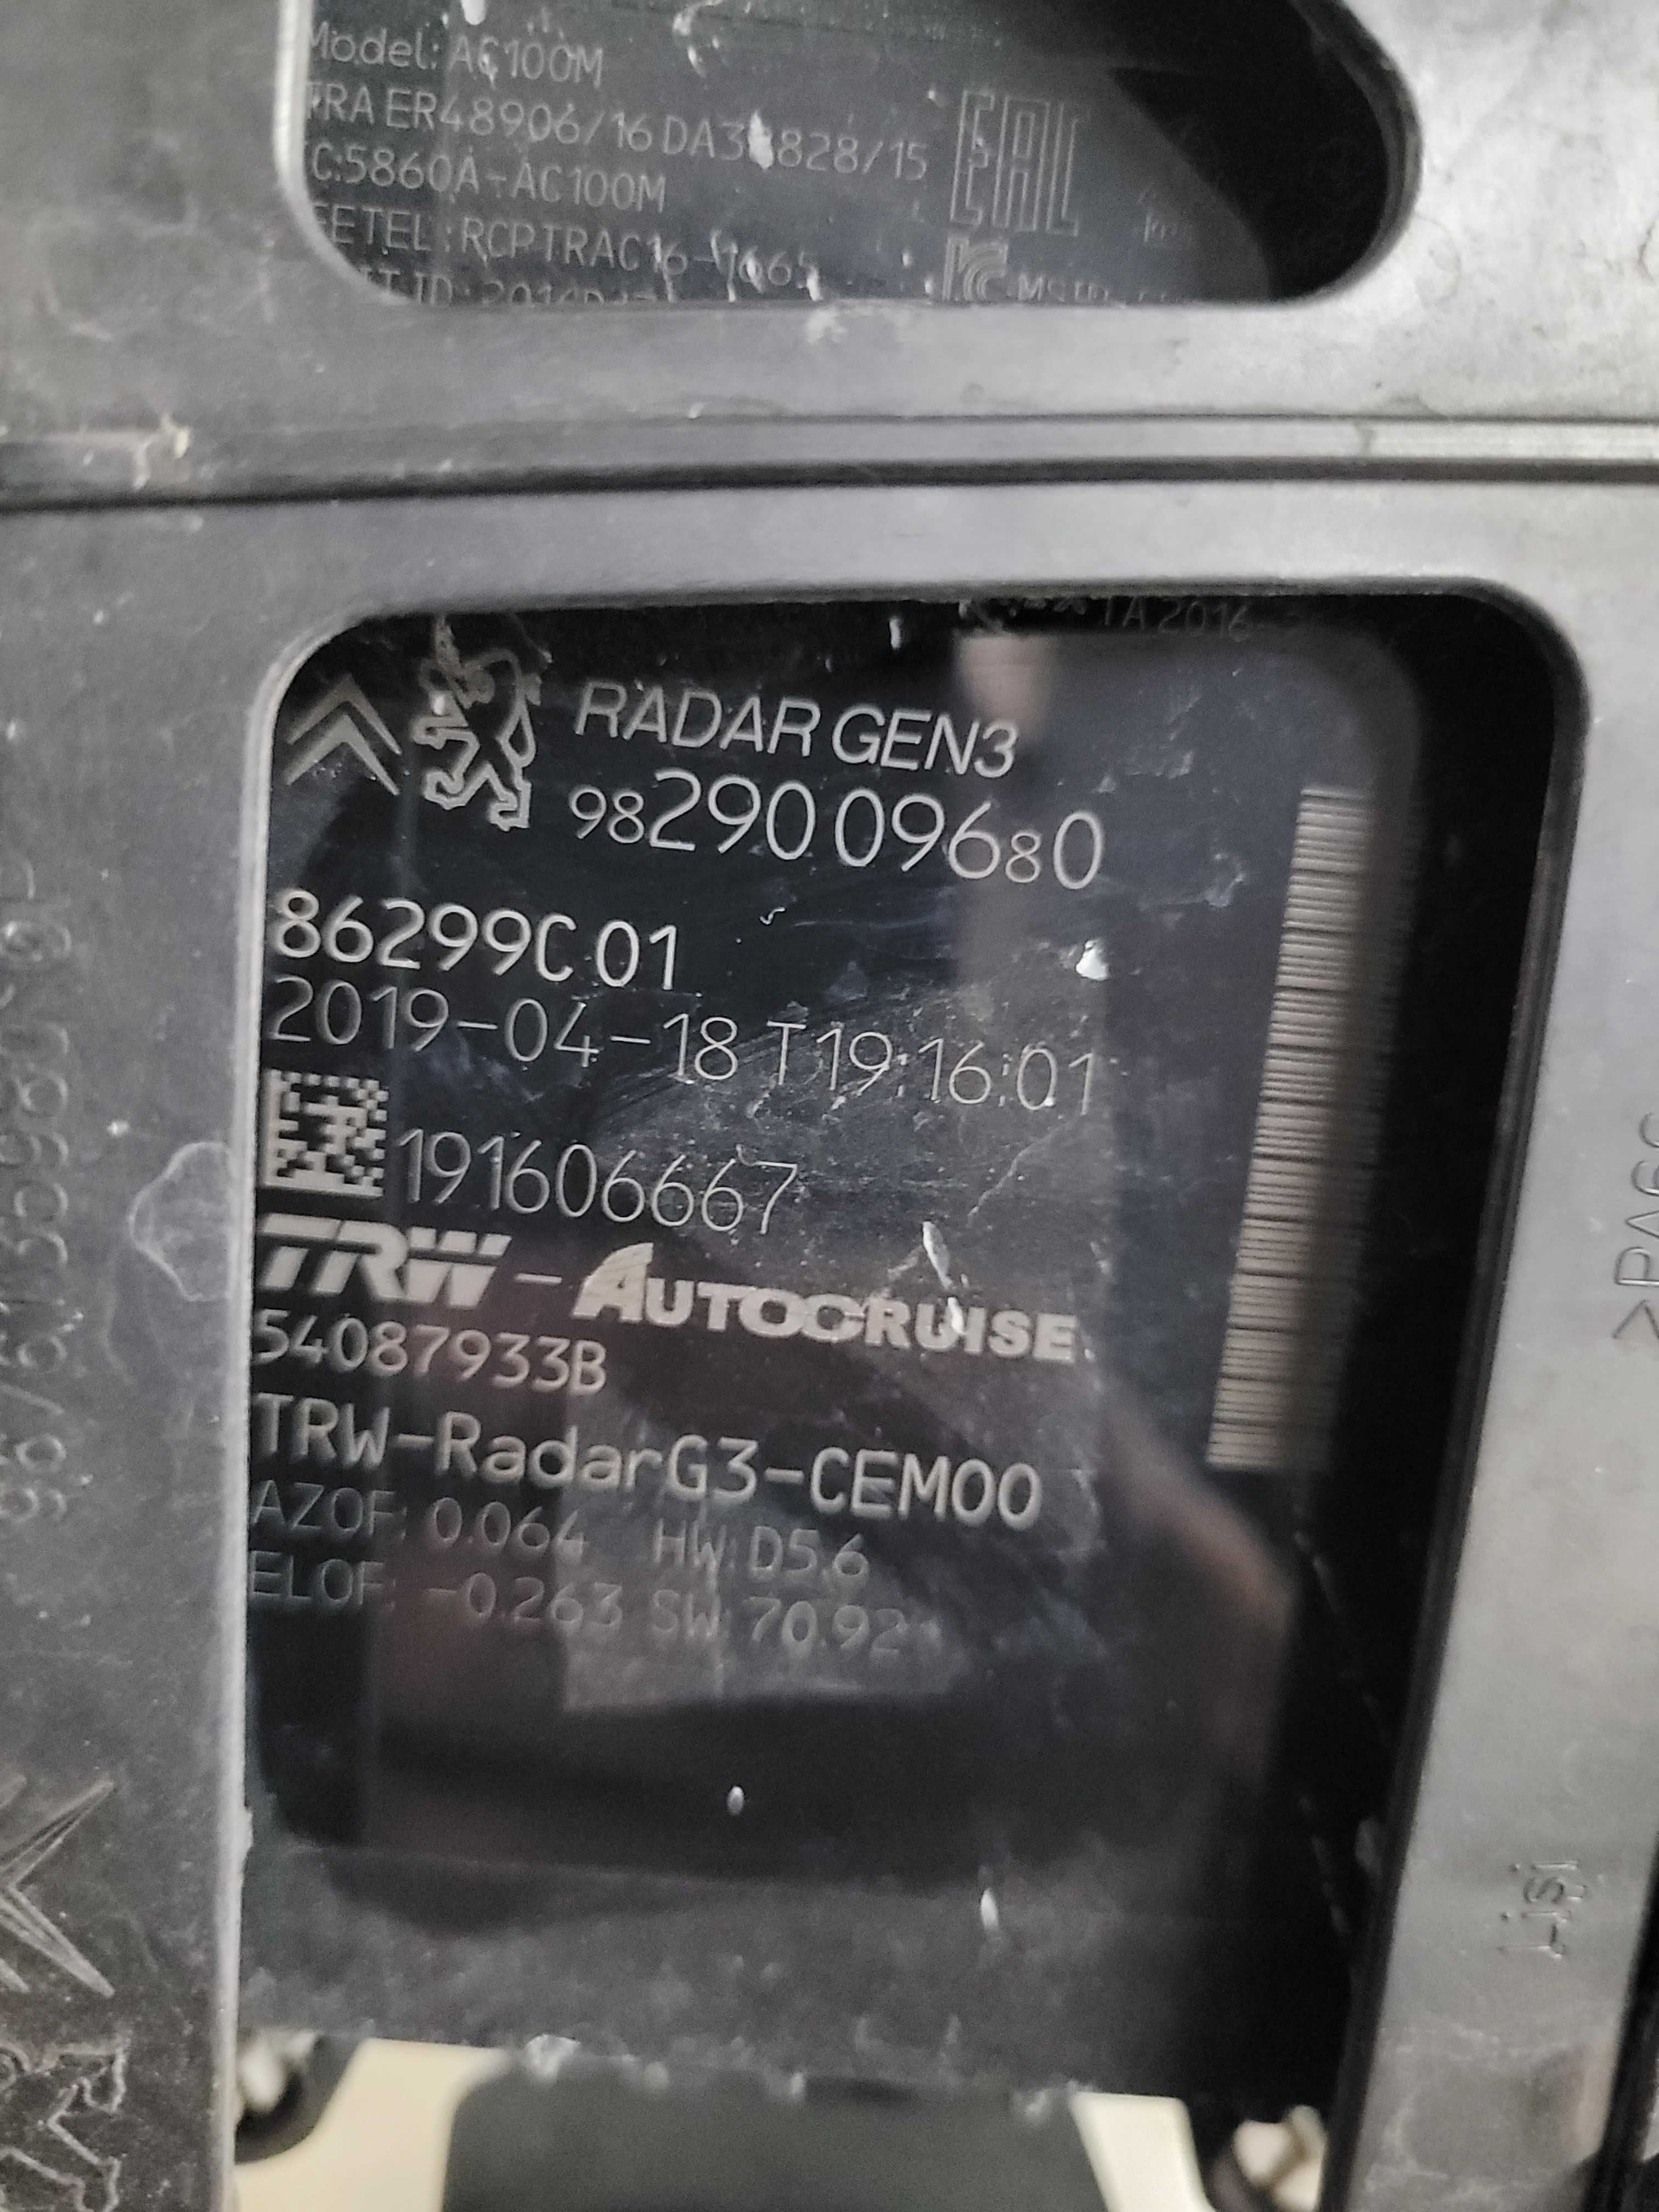 Distronic Radar Peugeot 3008 5008 Opel Gandland 9829009680